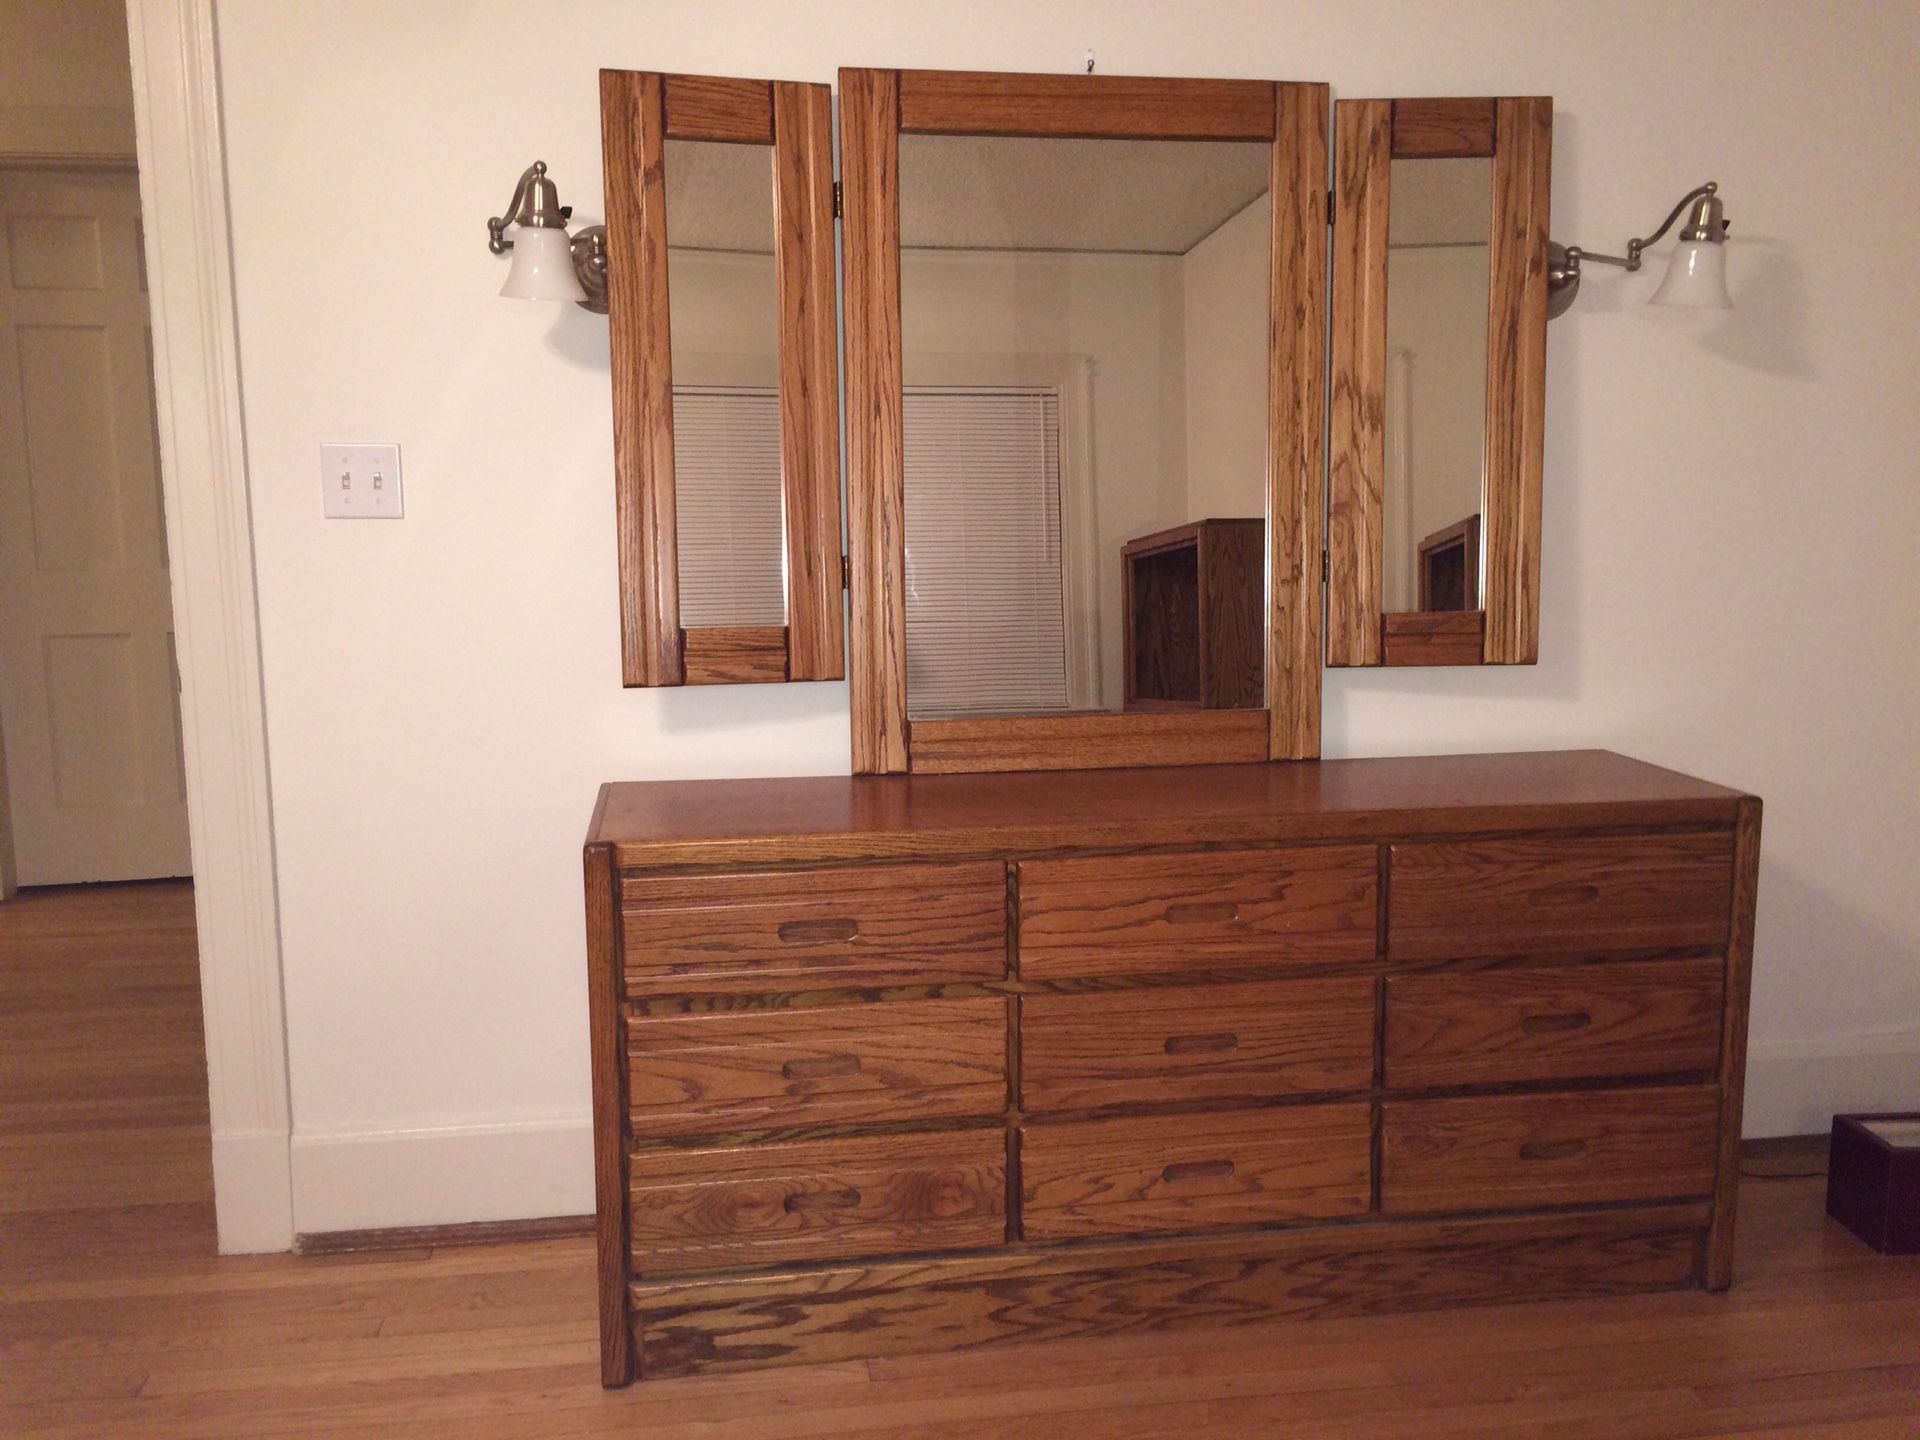 PRICE DROP - Oak Dresser w/mirror, TV dresser, and night stand